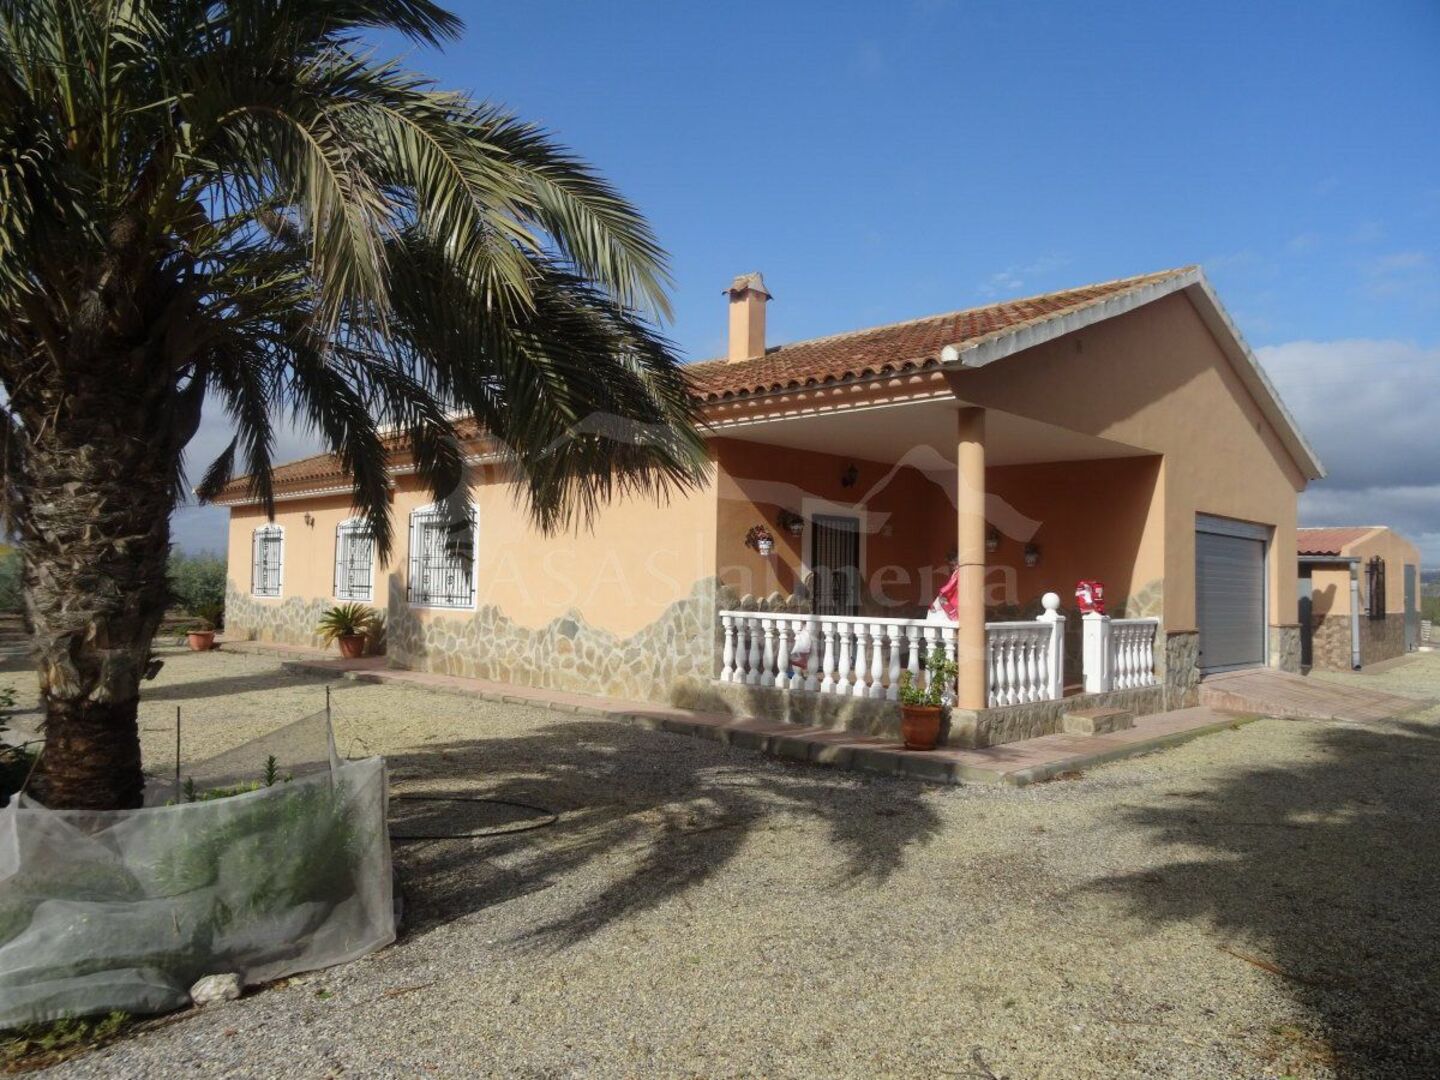 R02258: Villa en venta en Huercal-Overa, Almería